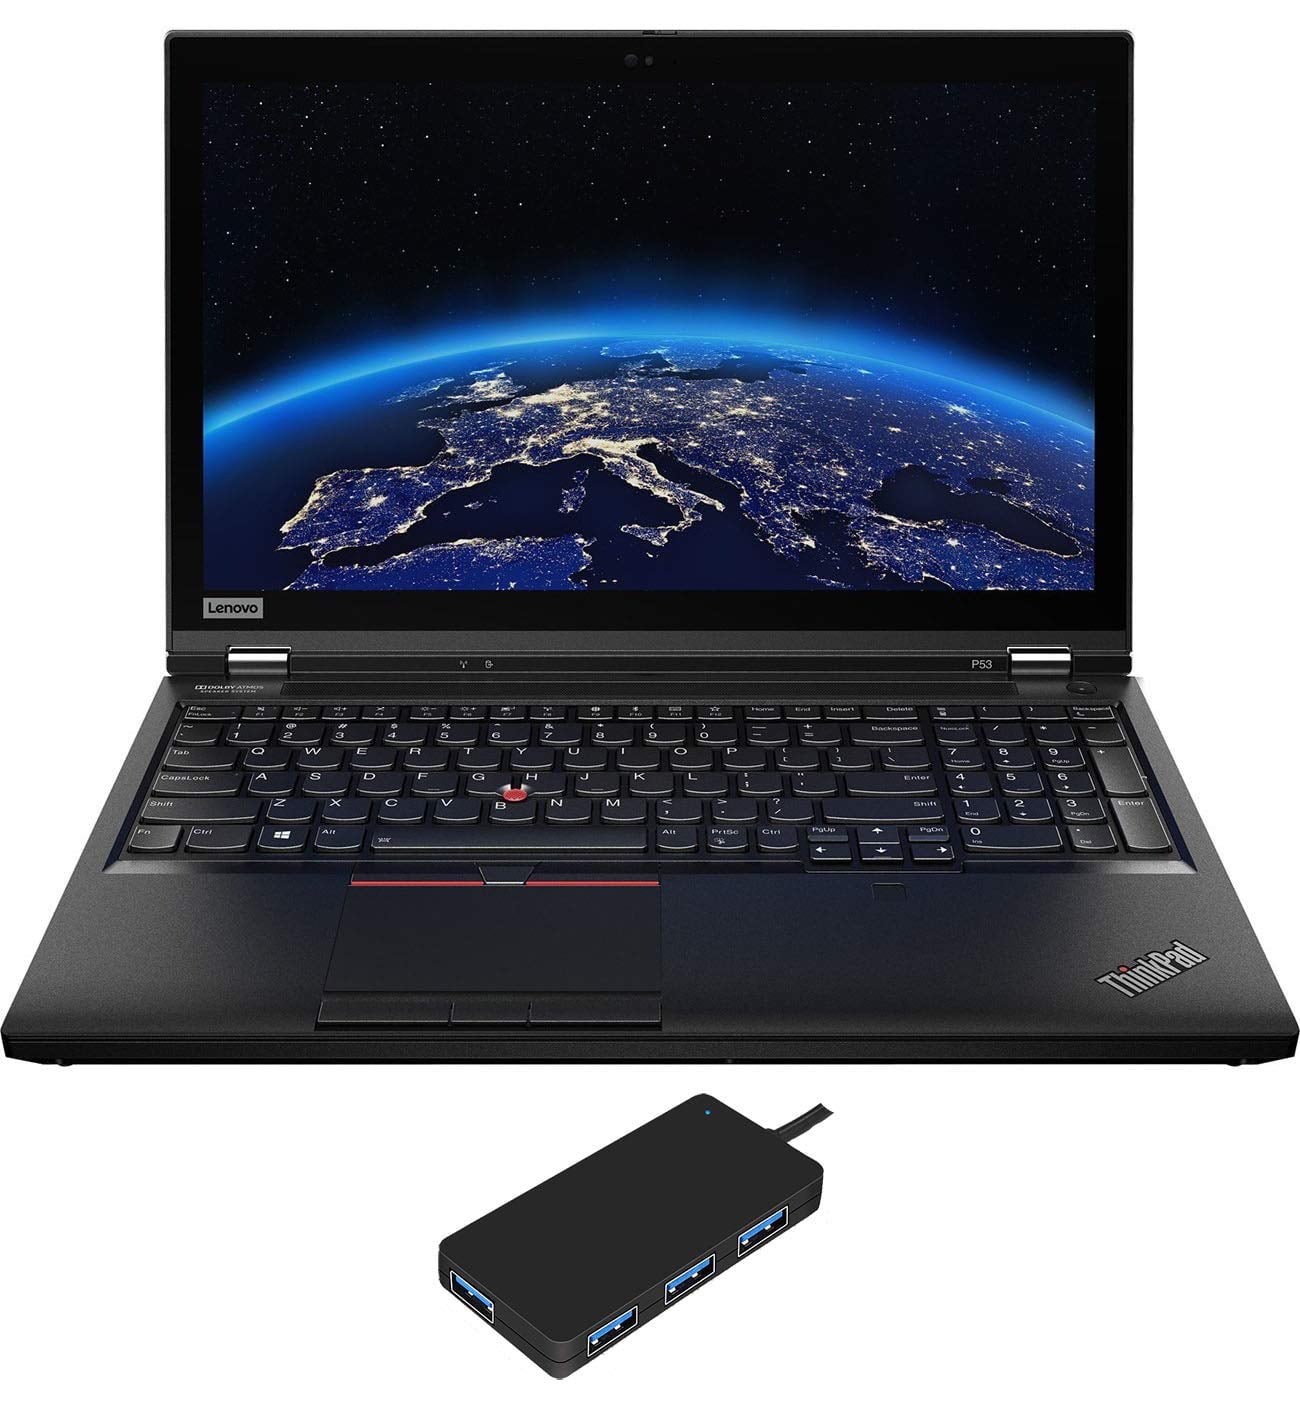 Lenovo ThinkPad P53 i9 Home and Business Laptop (Intel i9-9880H 8-Core